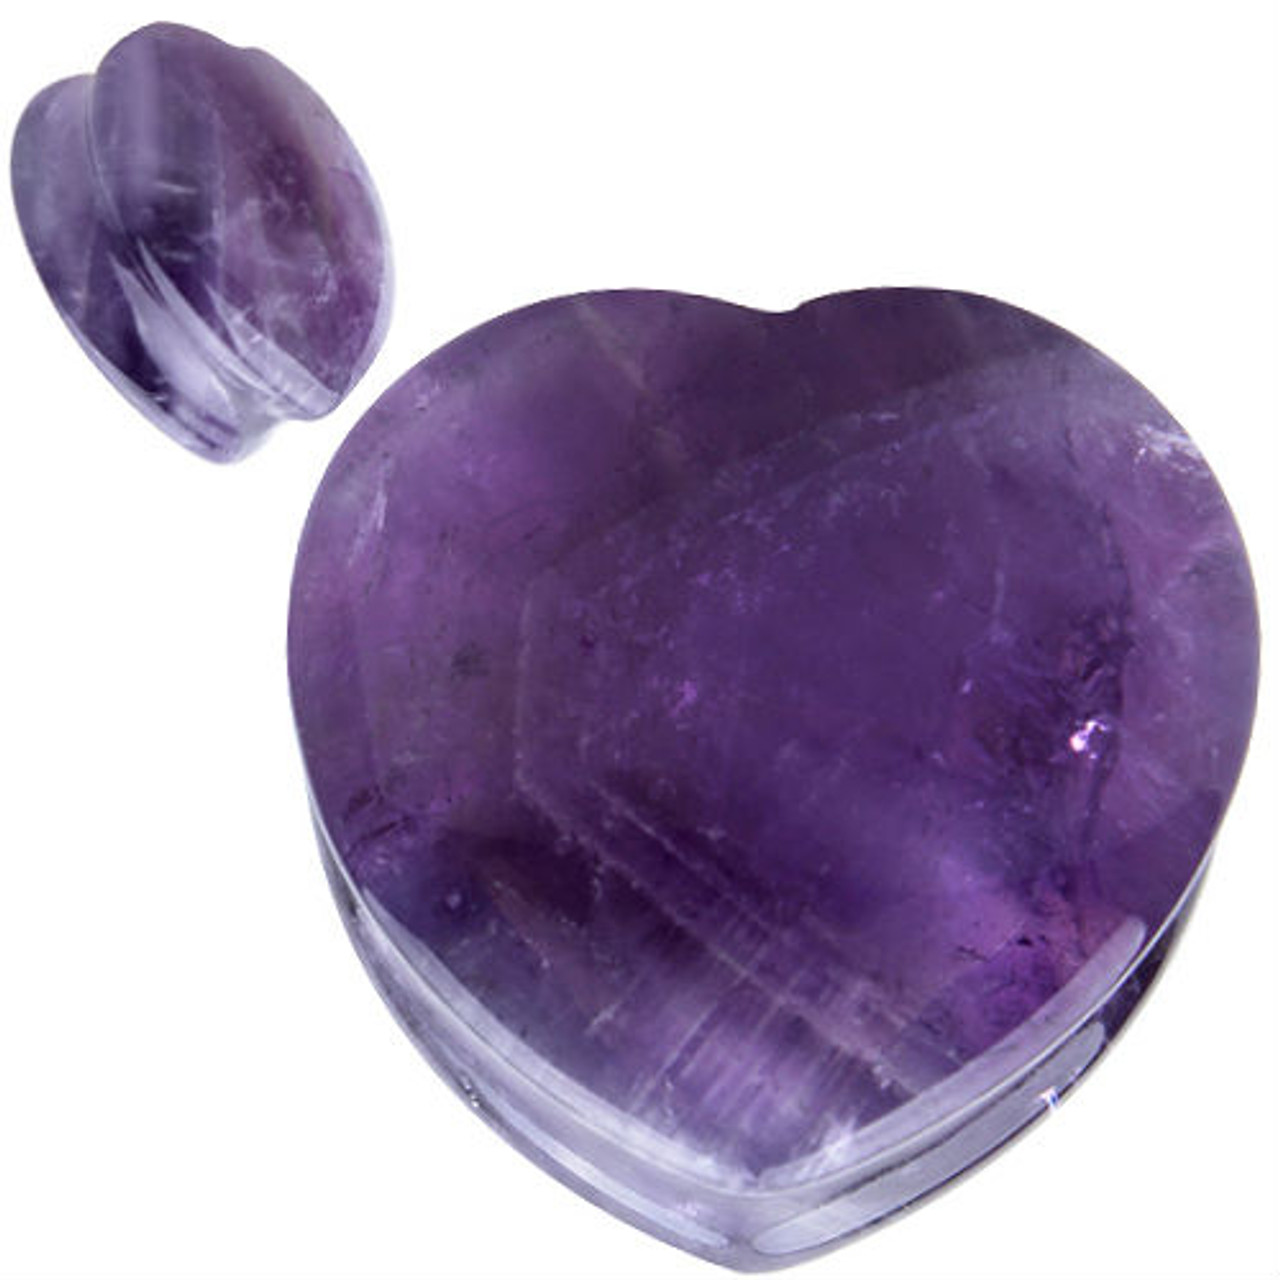 So Scene Hollow Tunnels Purple Amethyst Organic Stone Ear Plugs Gauges Sold in Pairs 